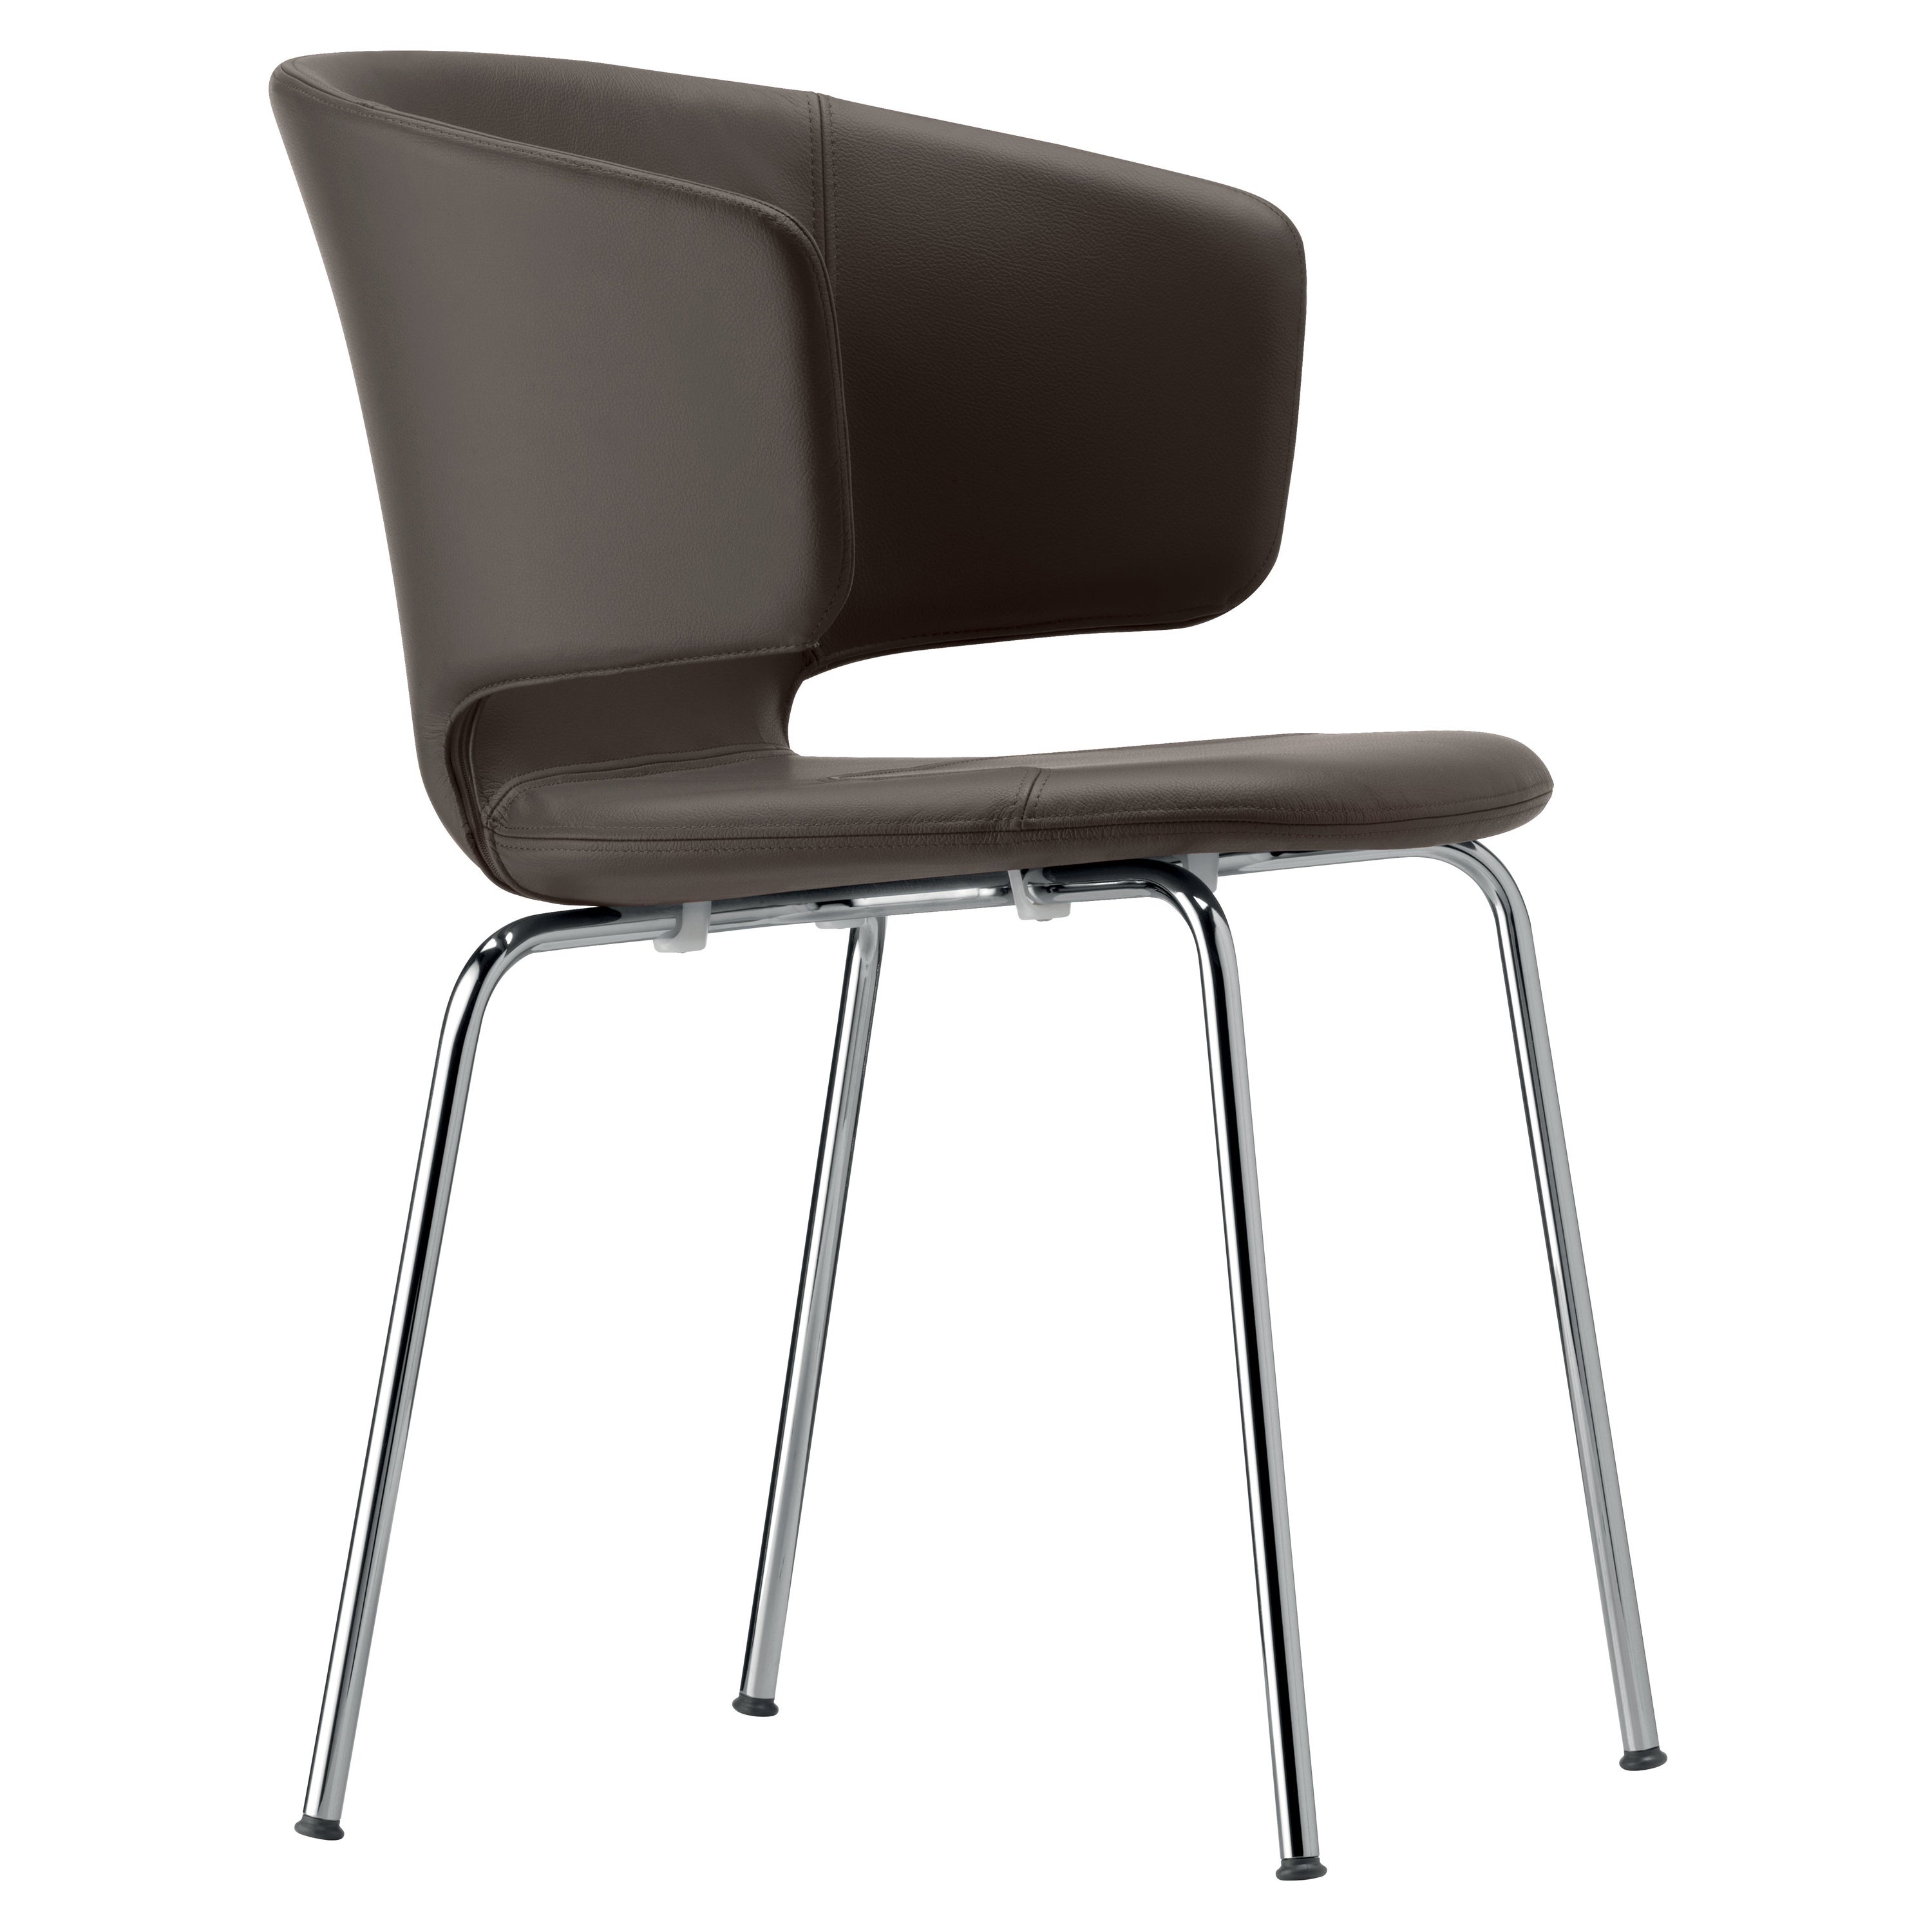 Alias 503 Taormina Chair in Brown Seat & Chromed Steel Frame by Alfredo Häberli